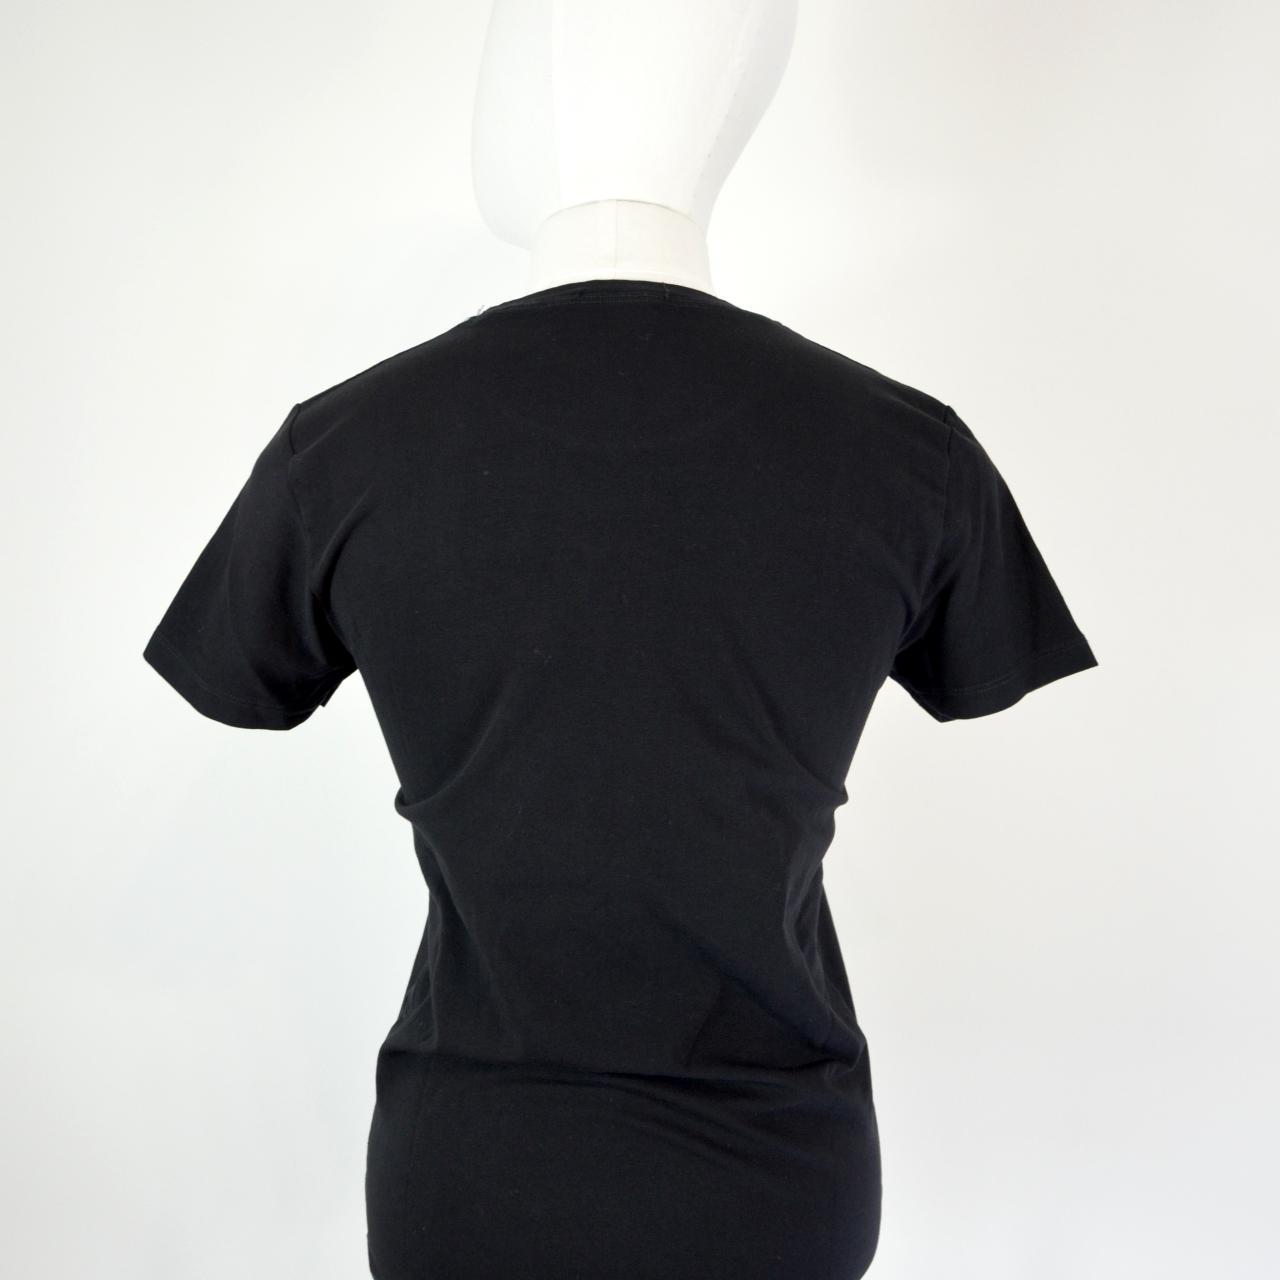 Product Image 2 - DUFF women's stretch T-shirt size